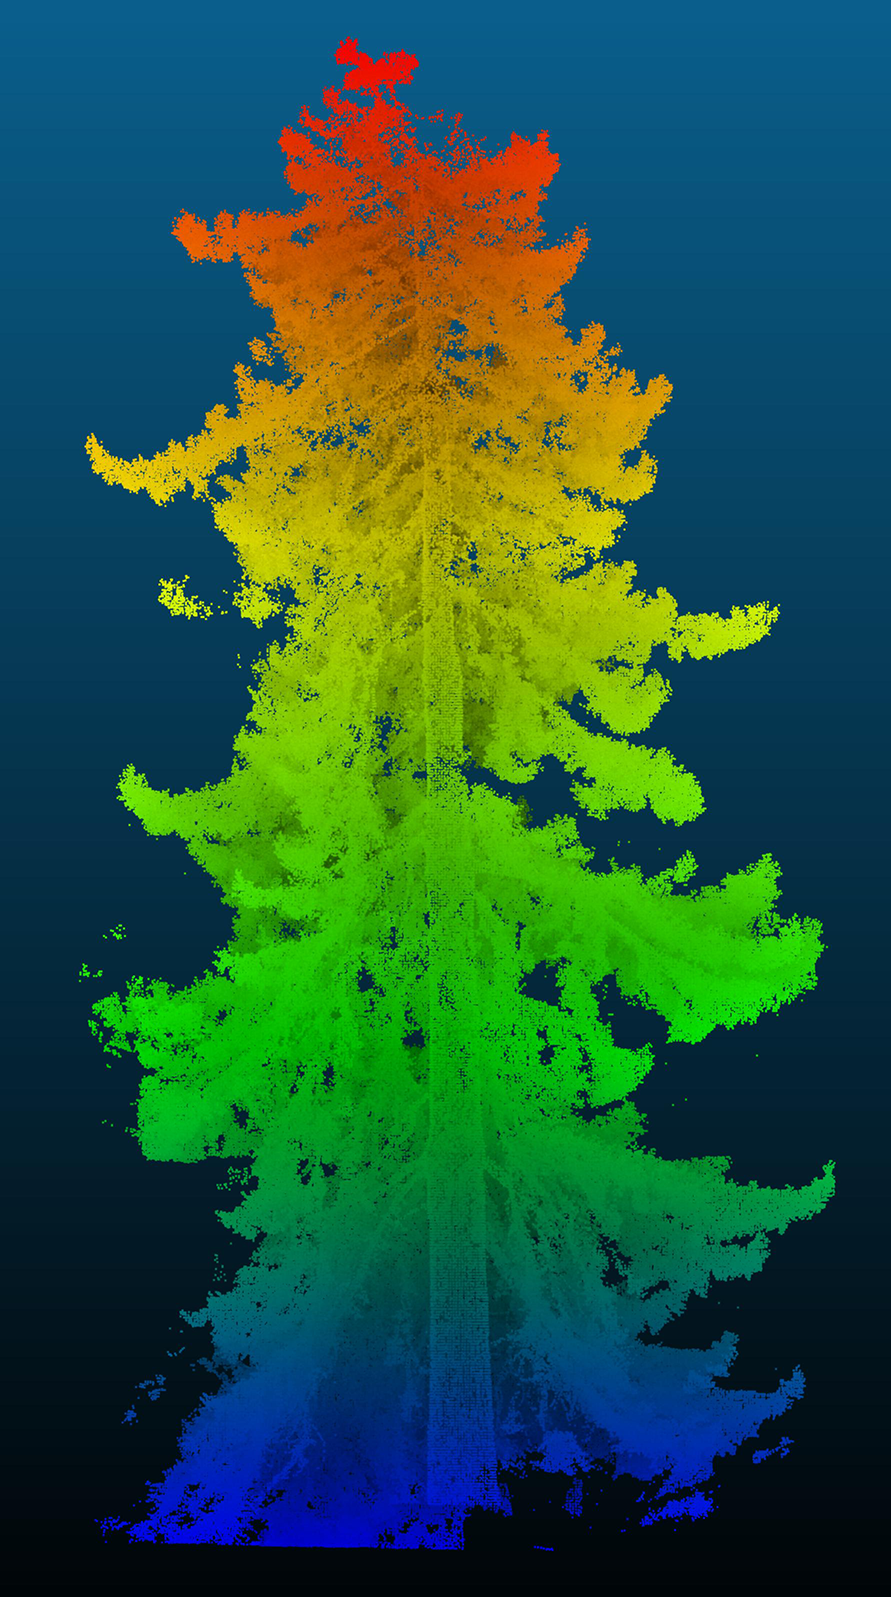 A redwood at Kew Gardens under a LiDar scan